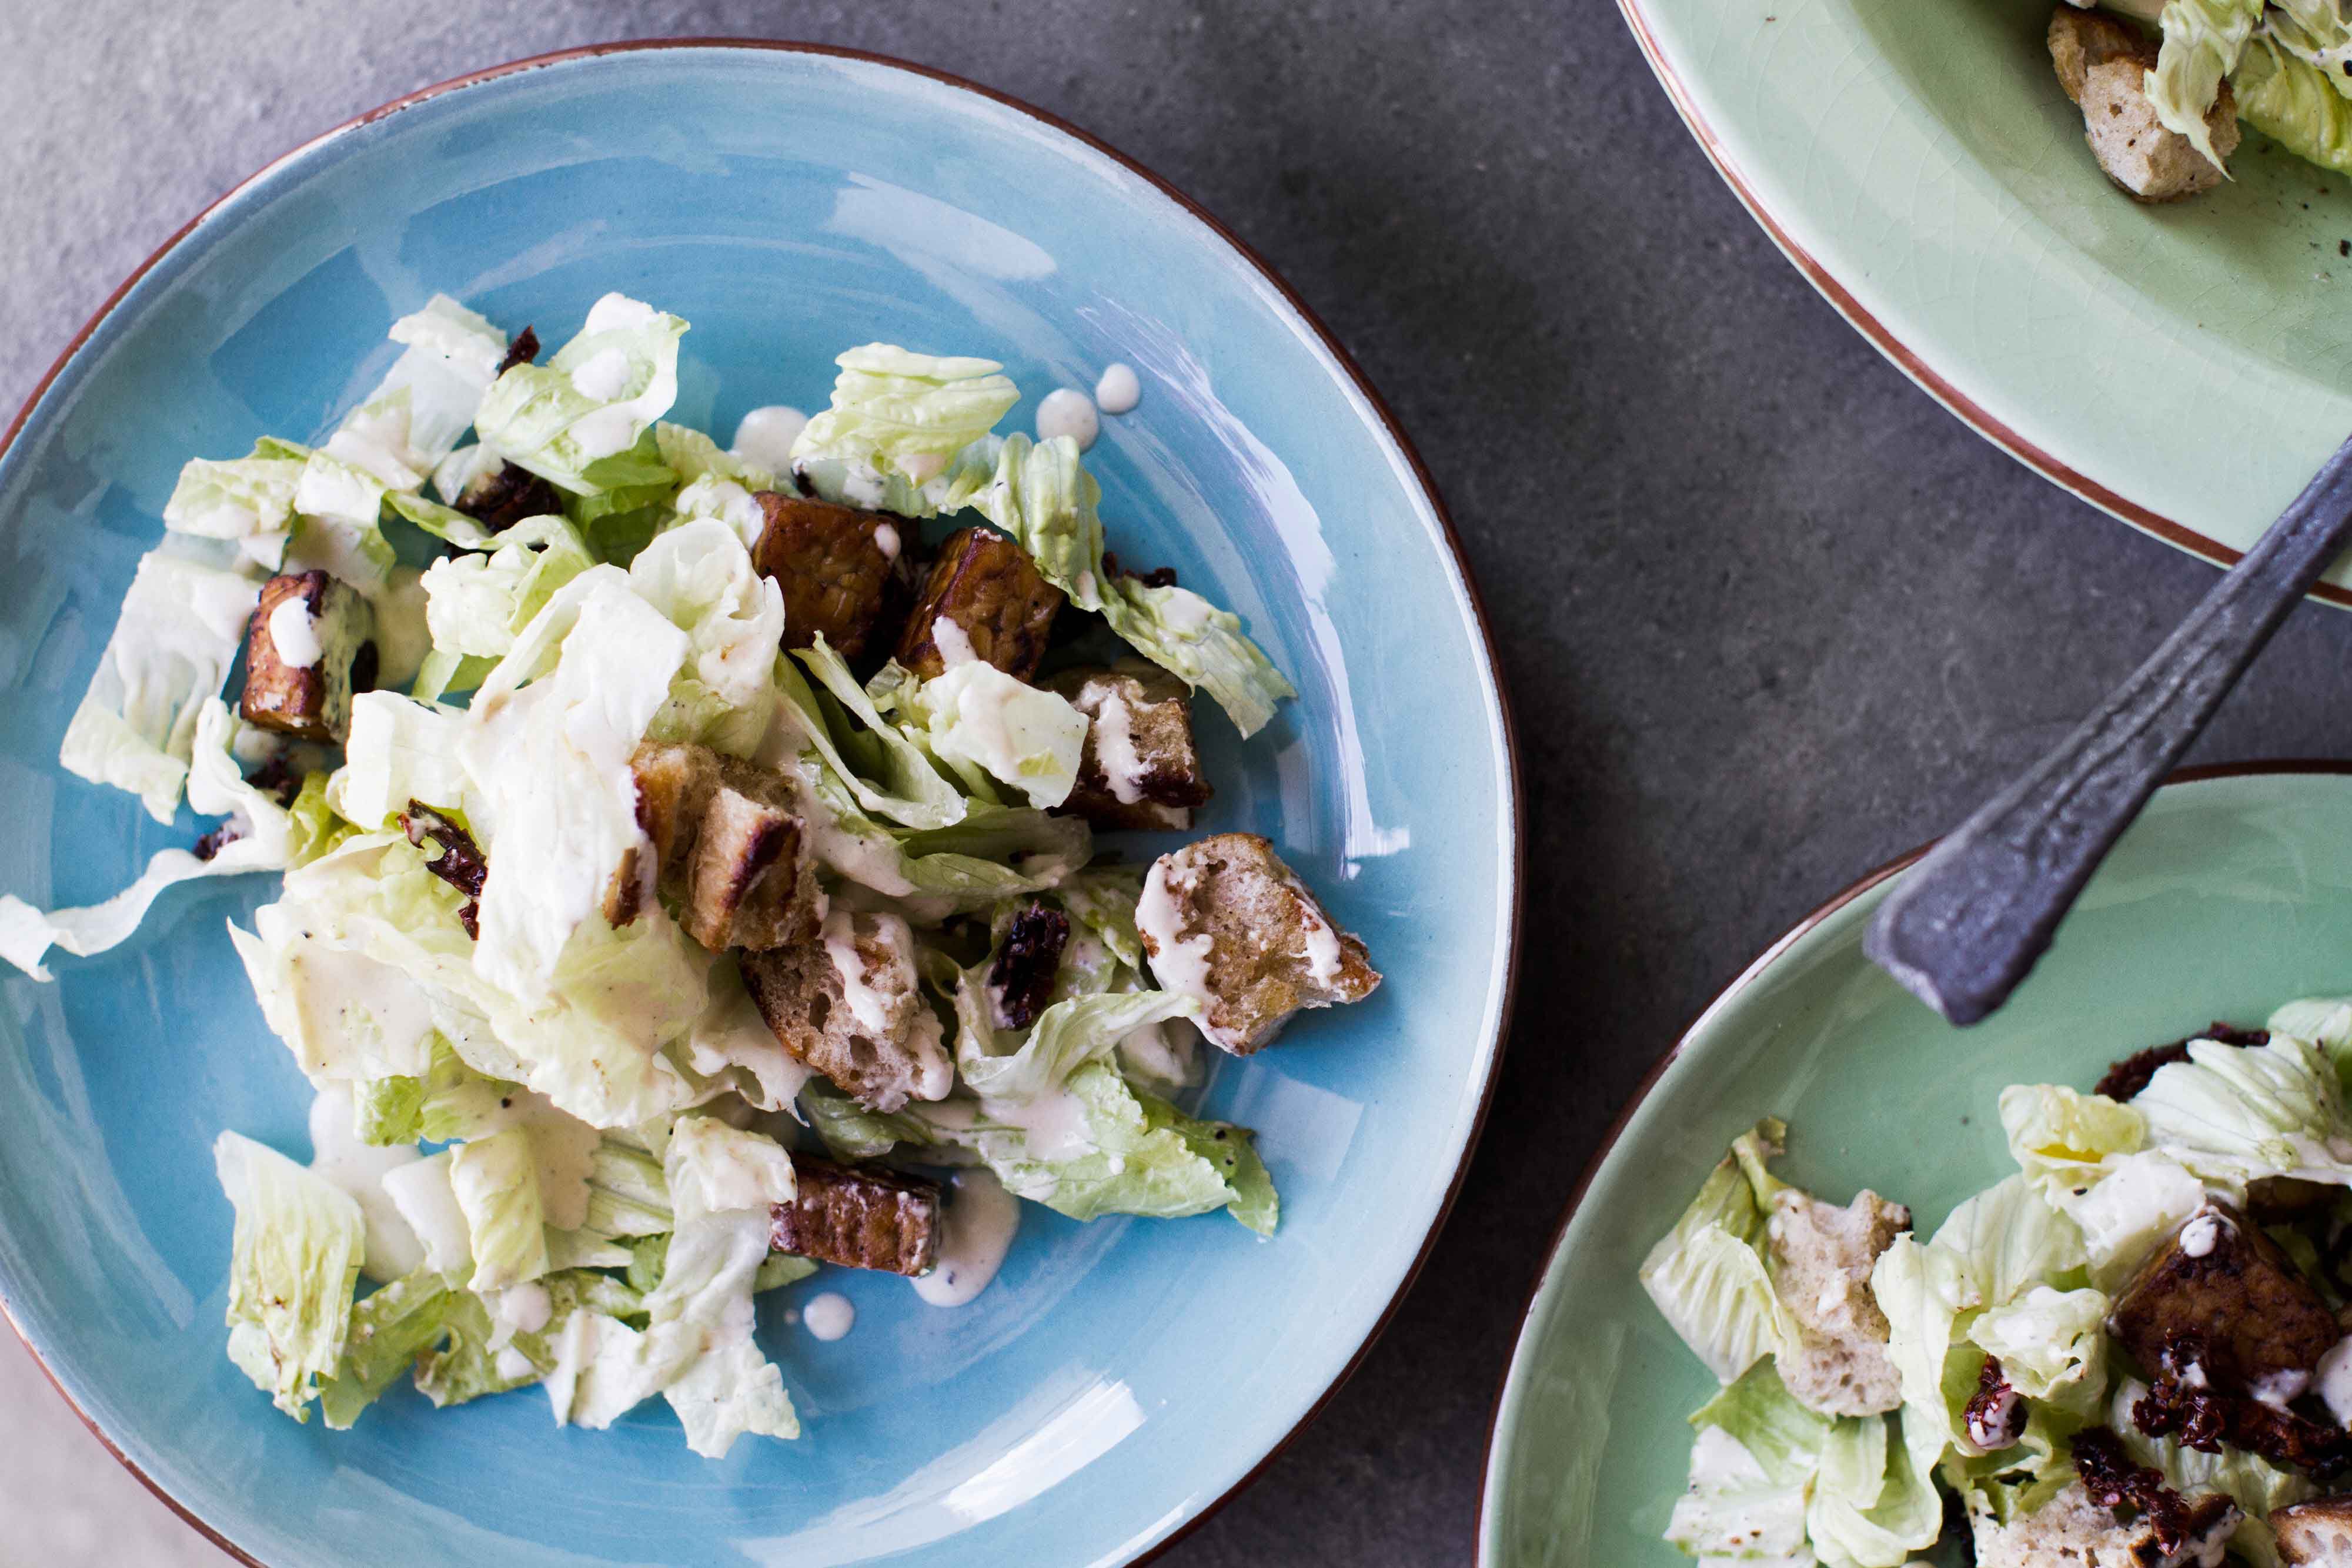 Vegetarian Caesar salad with an Asian twist